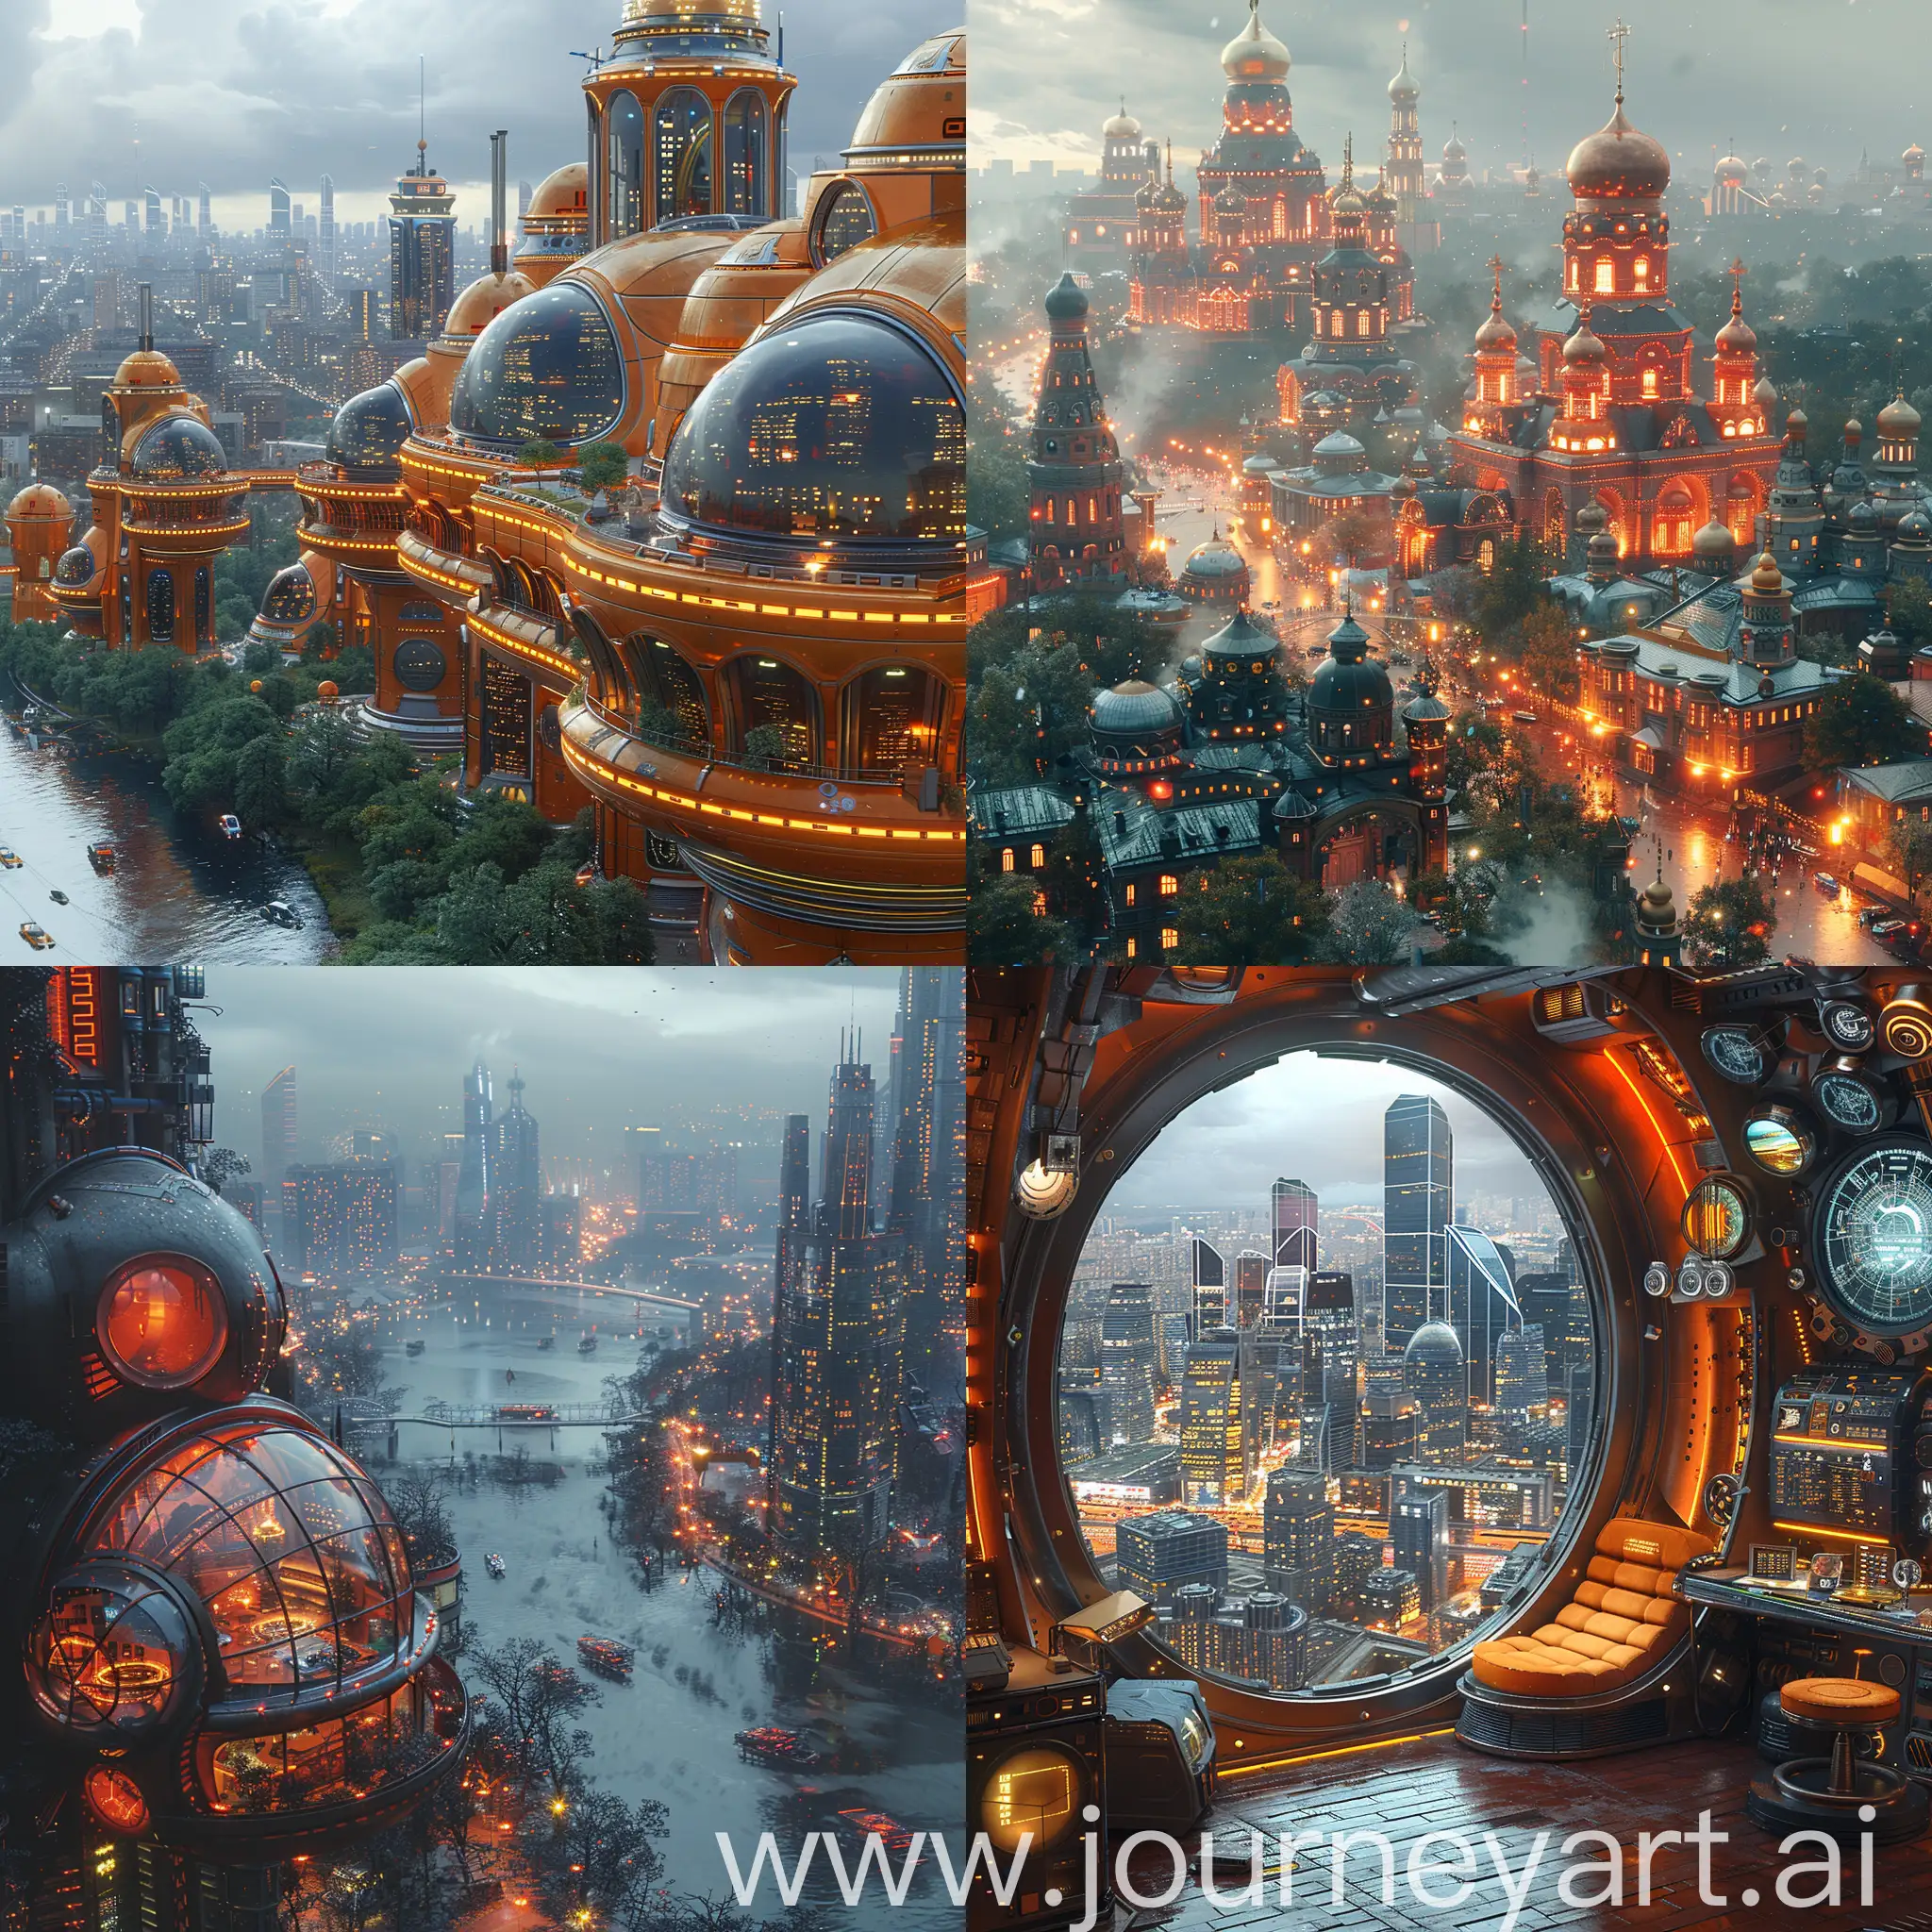 Futuristic-HighTech-Moscow-in-Postcyberpunk-Utopia